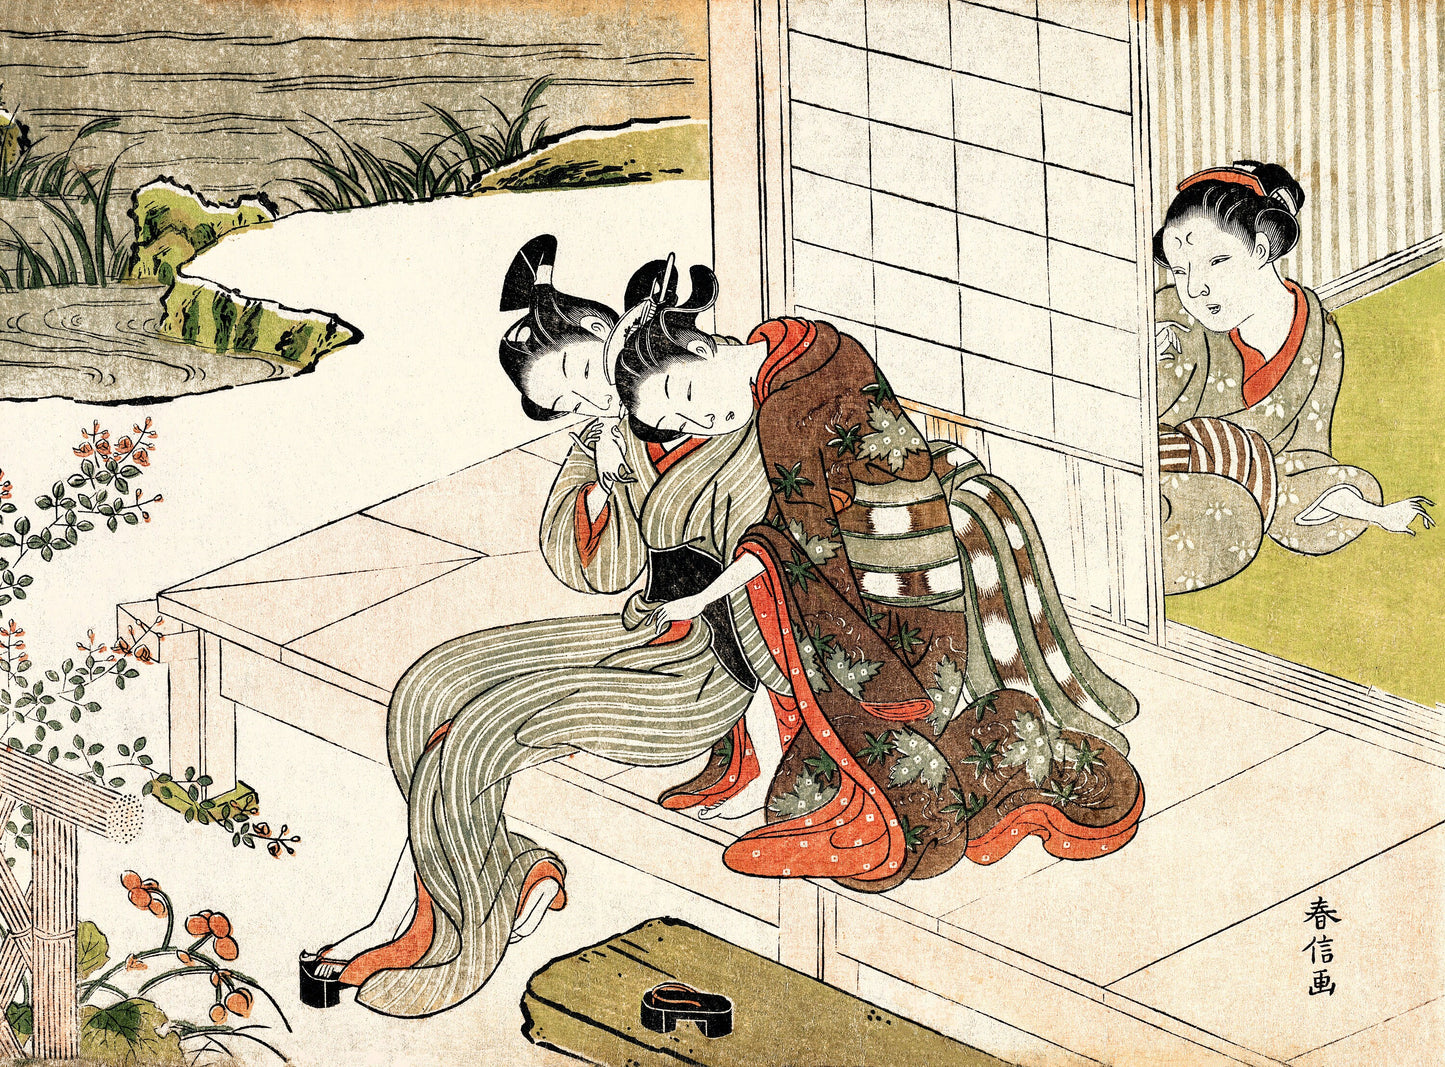 Suzuki Harunobo Courtesans & Beauties Woodblock Prints [21 Images]